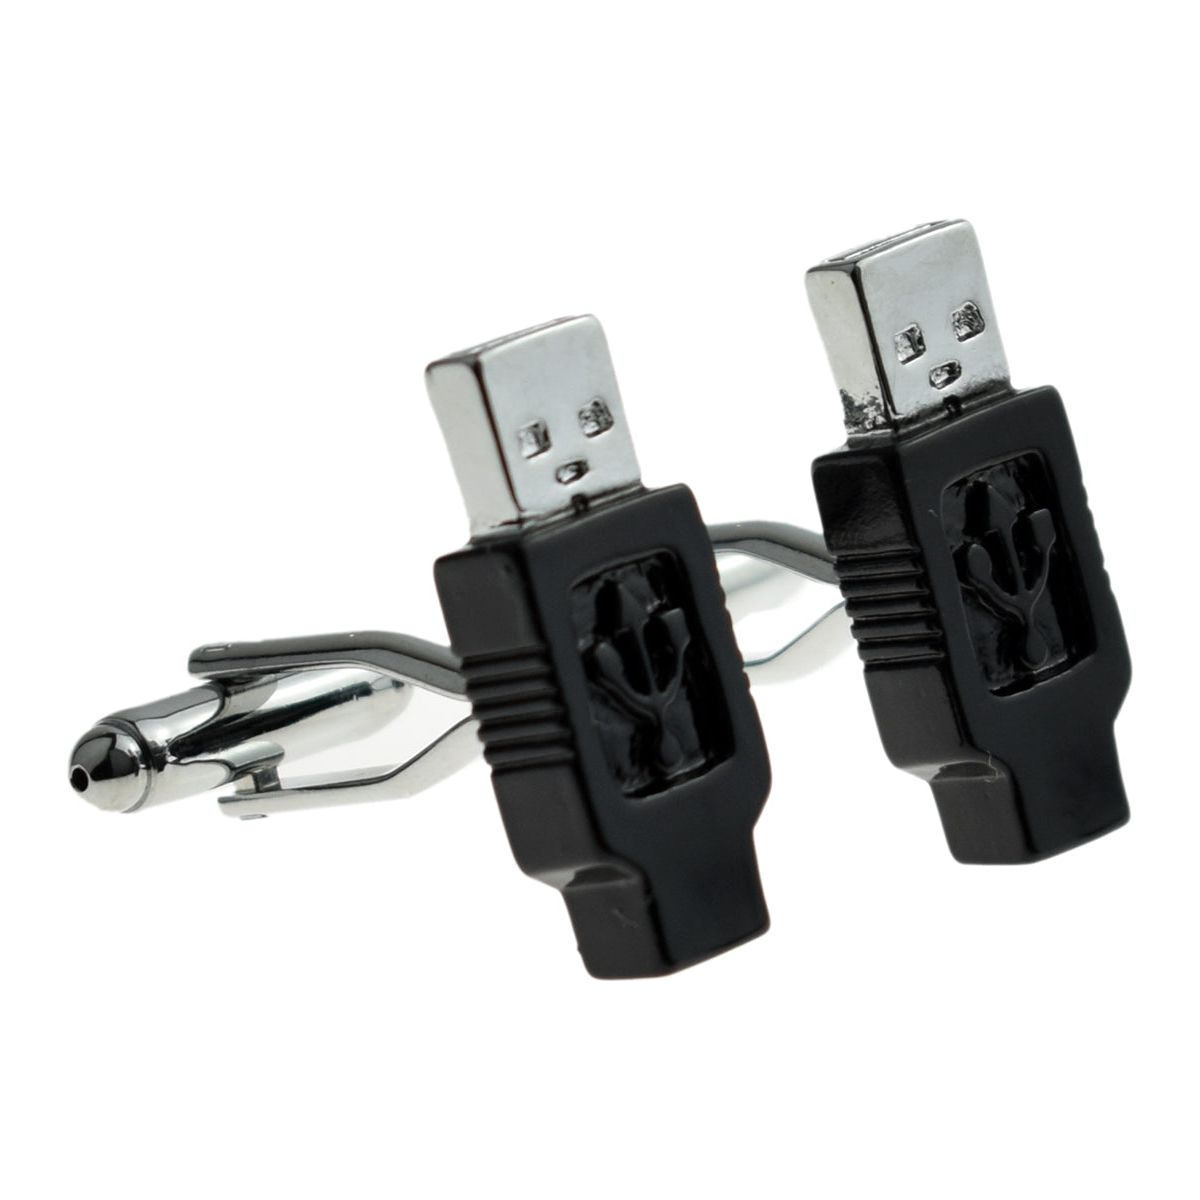 USB Adaptor Style Cufflinks - Ashton and Finch